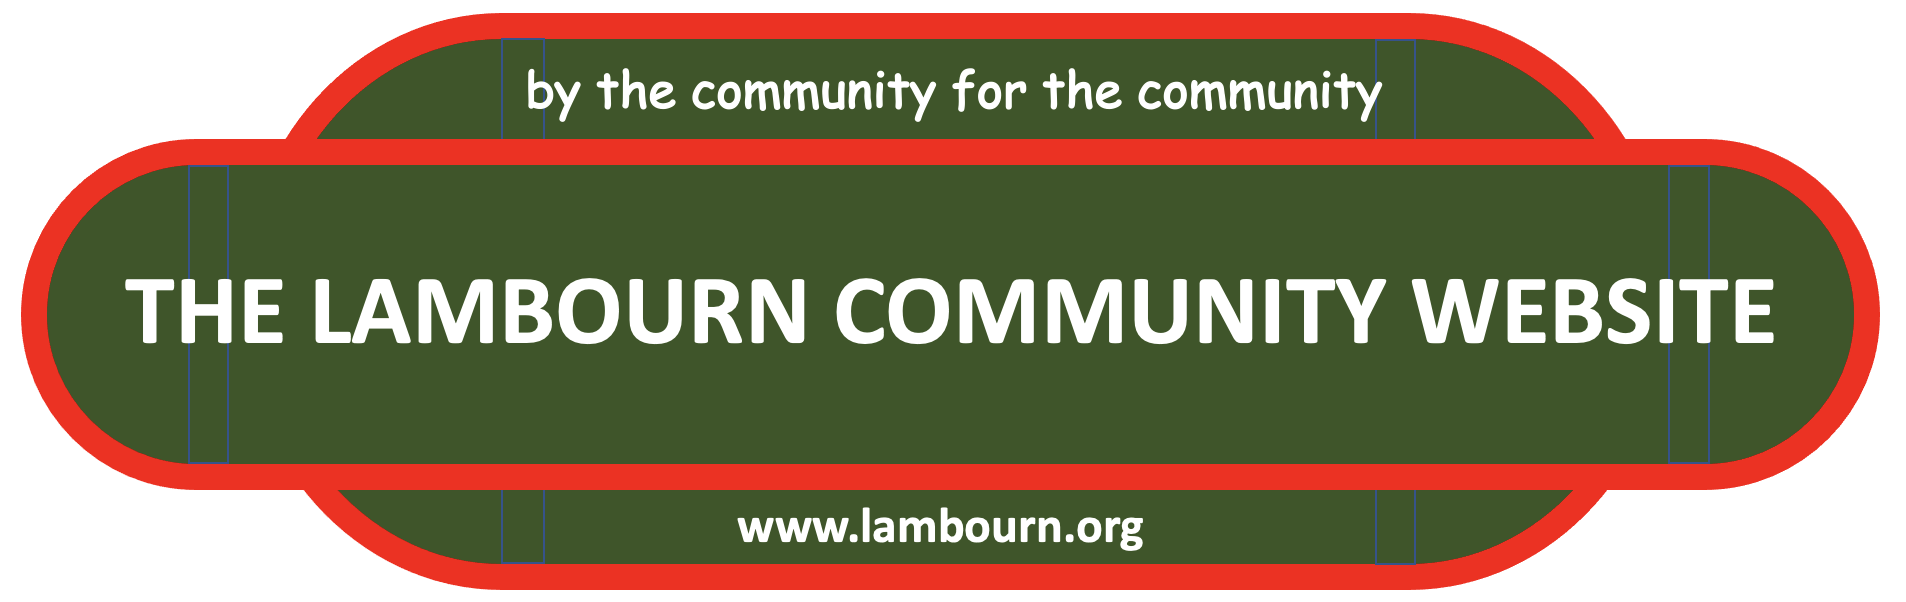 Lambourn Community Website Logo